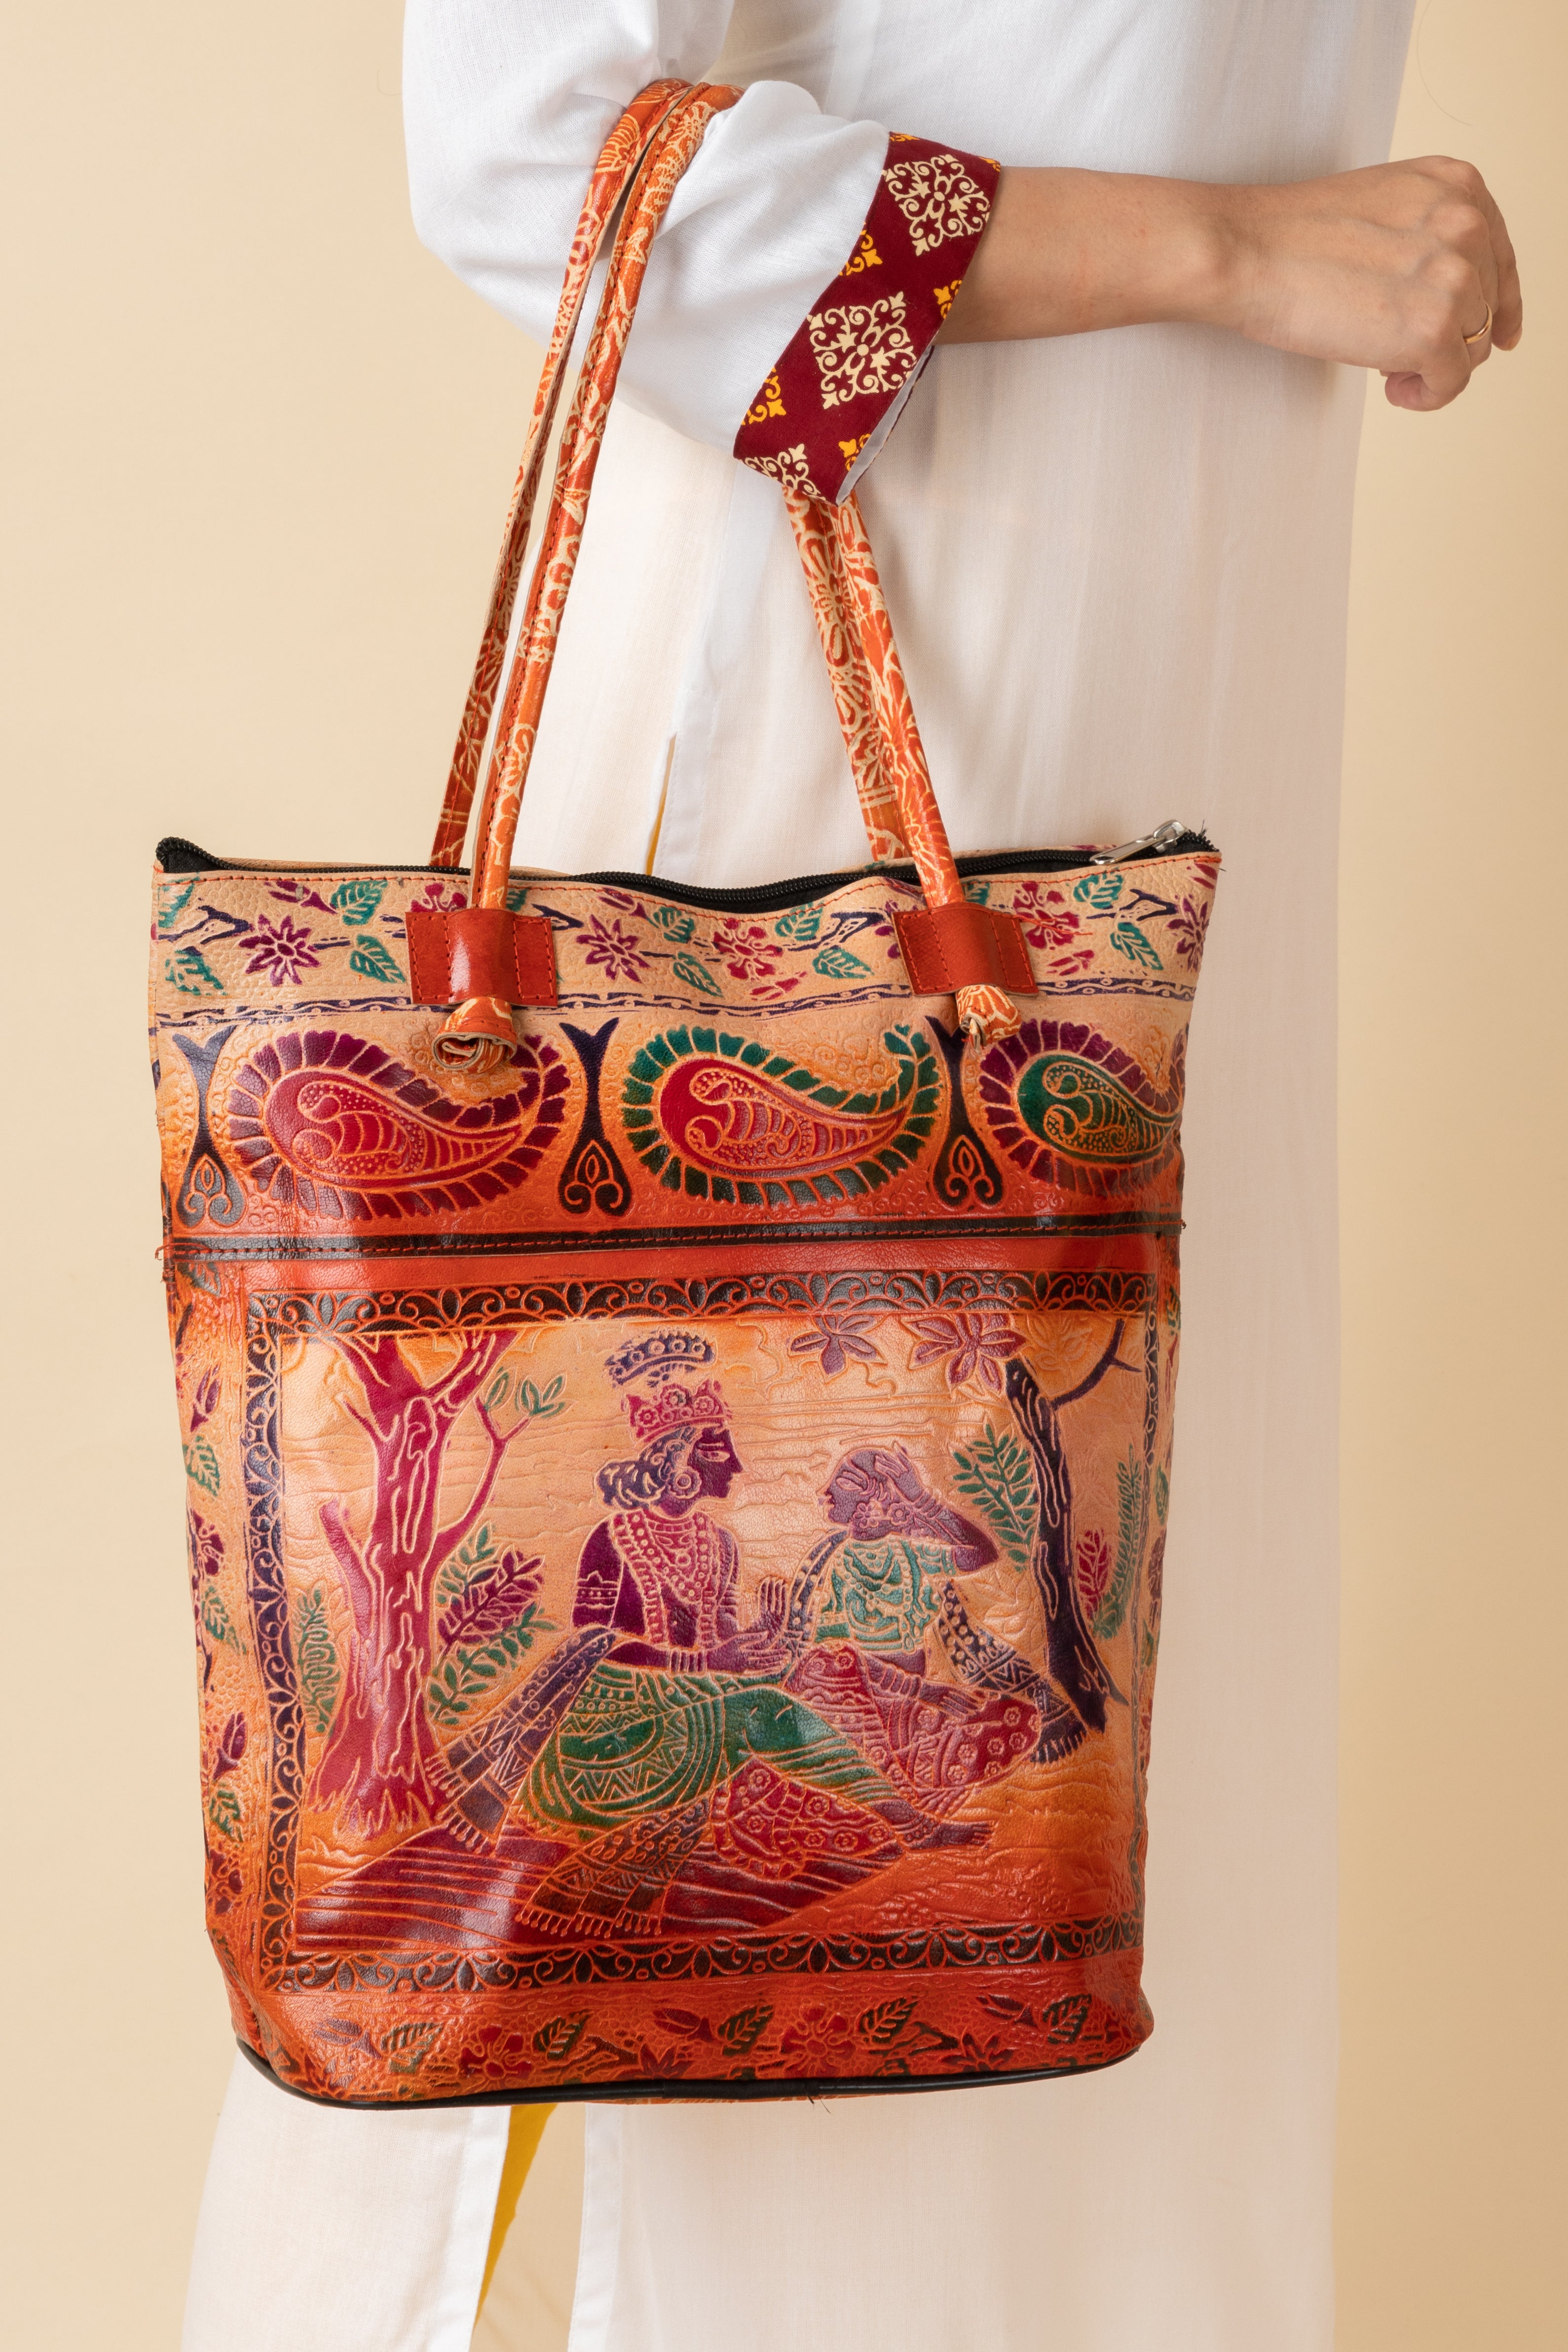 shantiniketan-leather-traditional-printed-brown-handbag-14-14-for-women-hb10